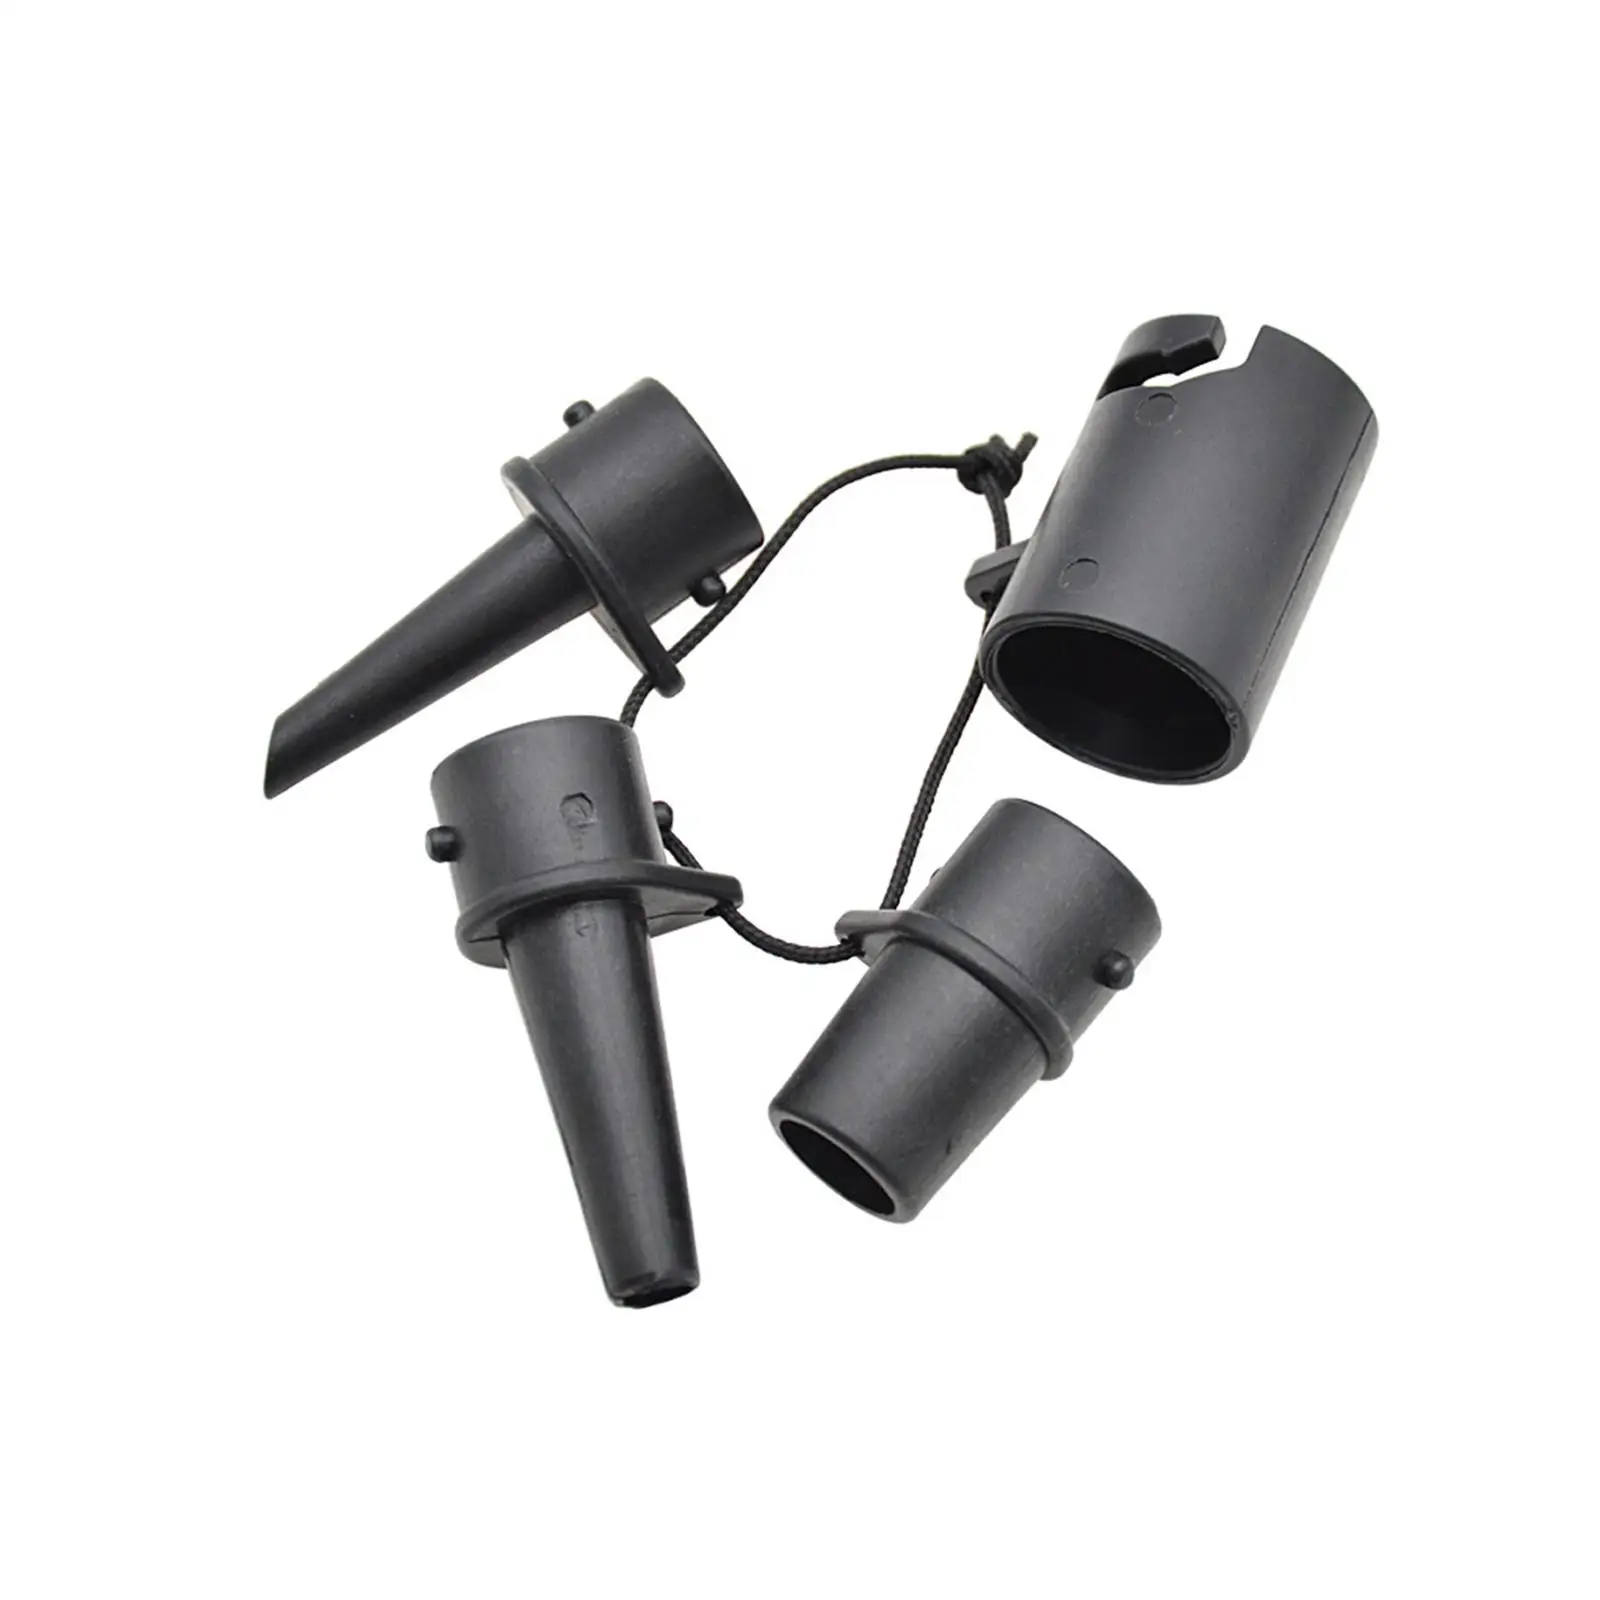 4 Pieces Inflatable Pump Adapter Valves Inflator Pump Nozzle Air Valves Attachment